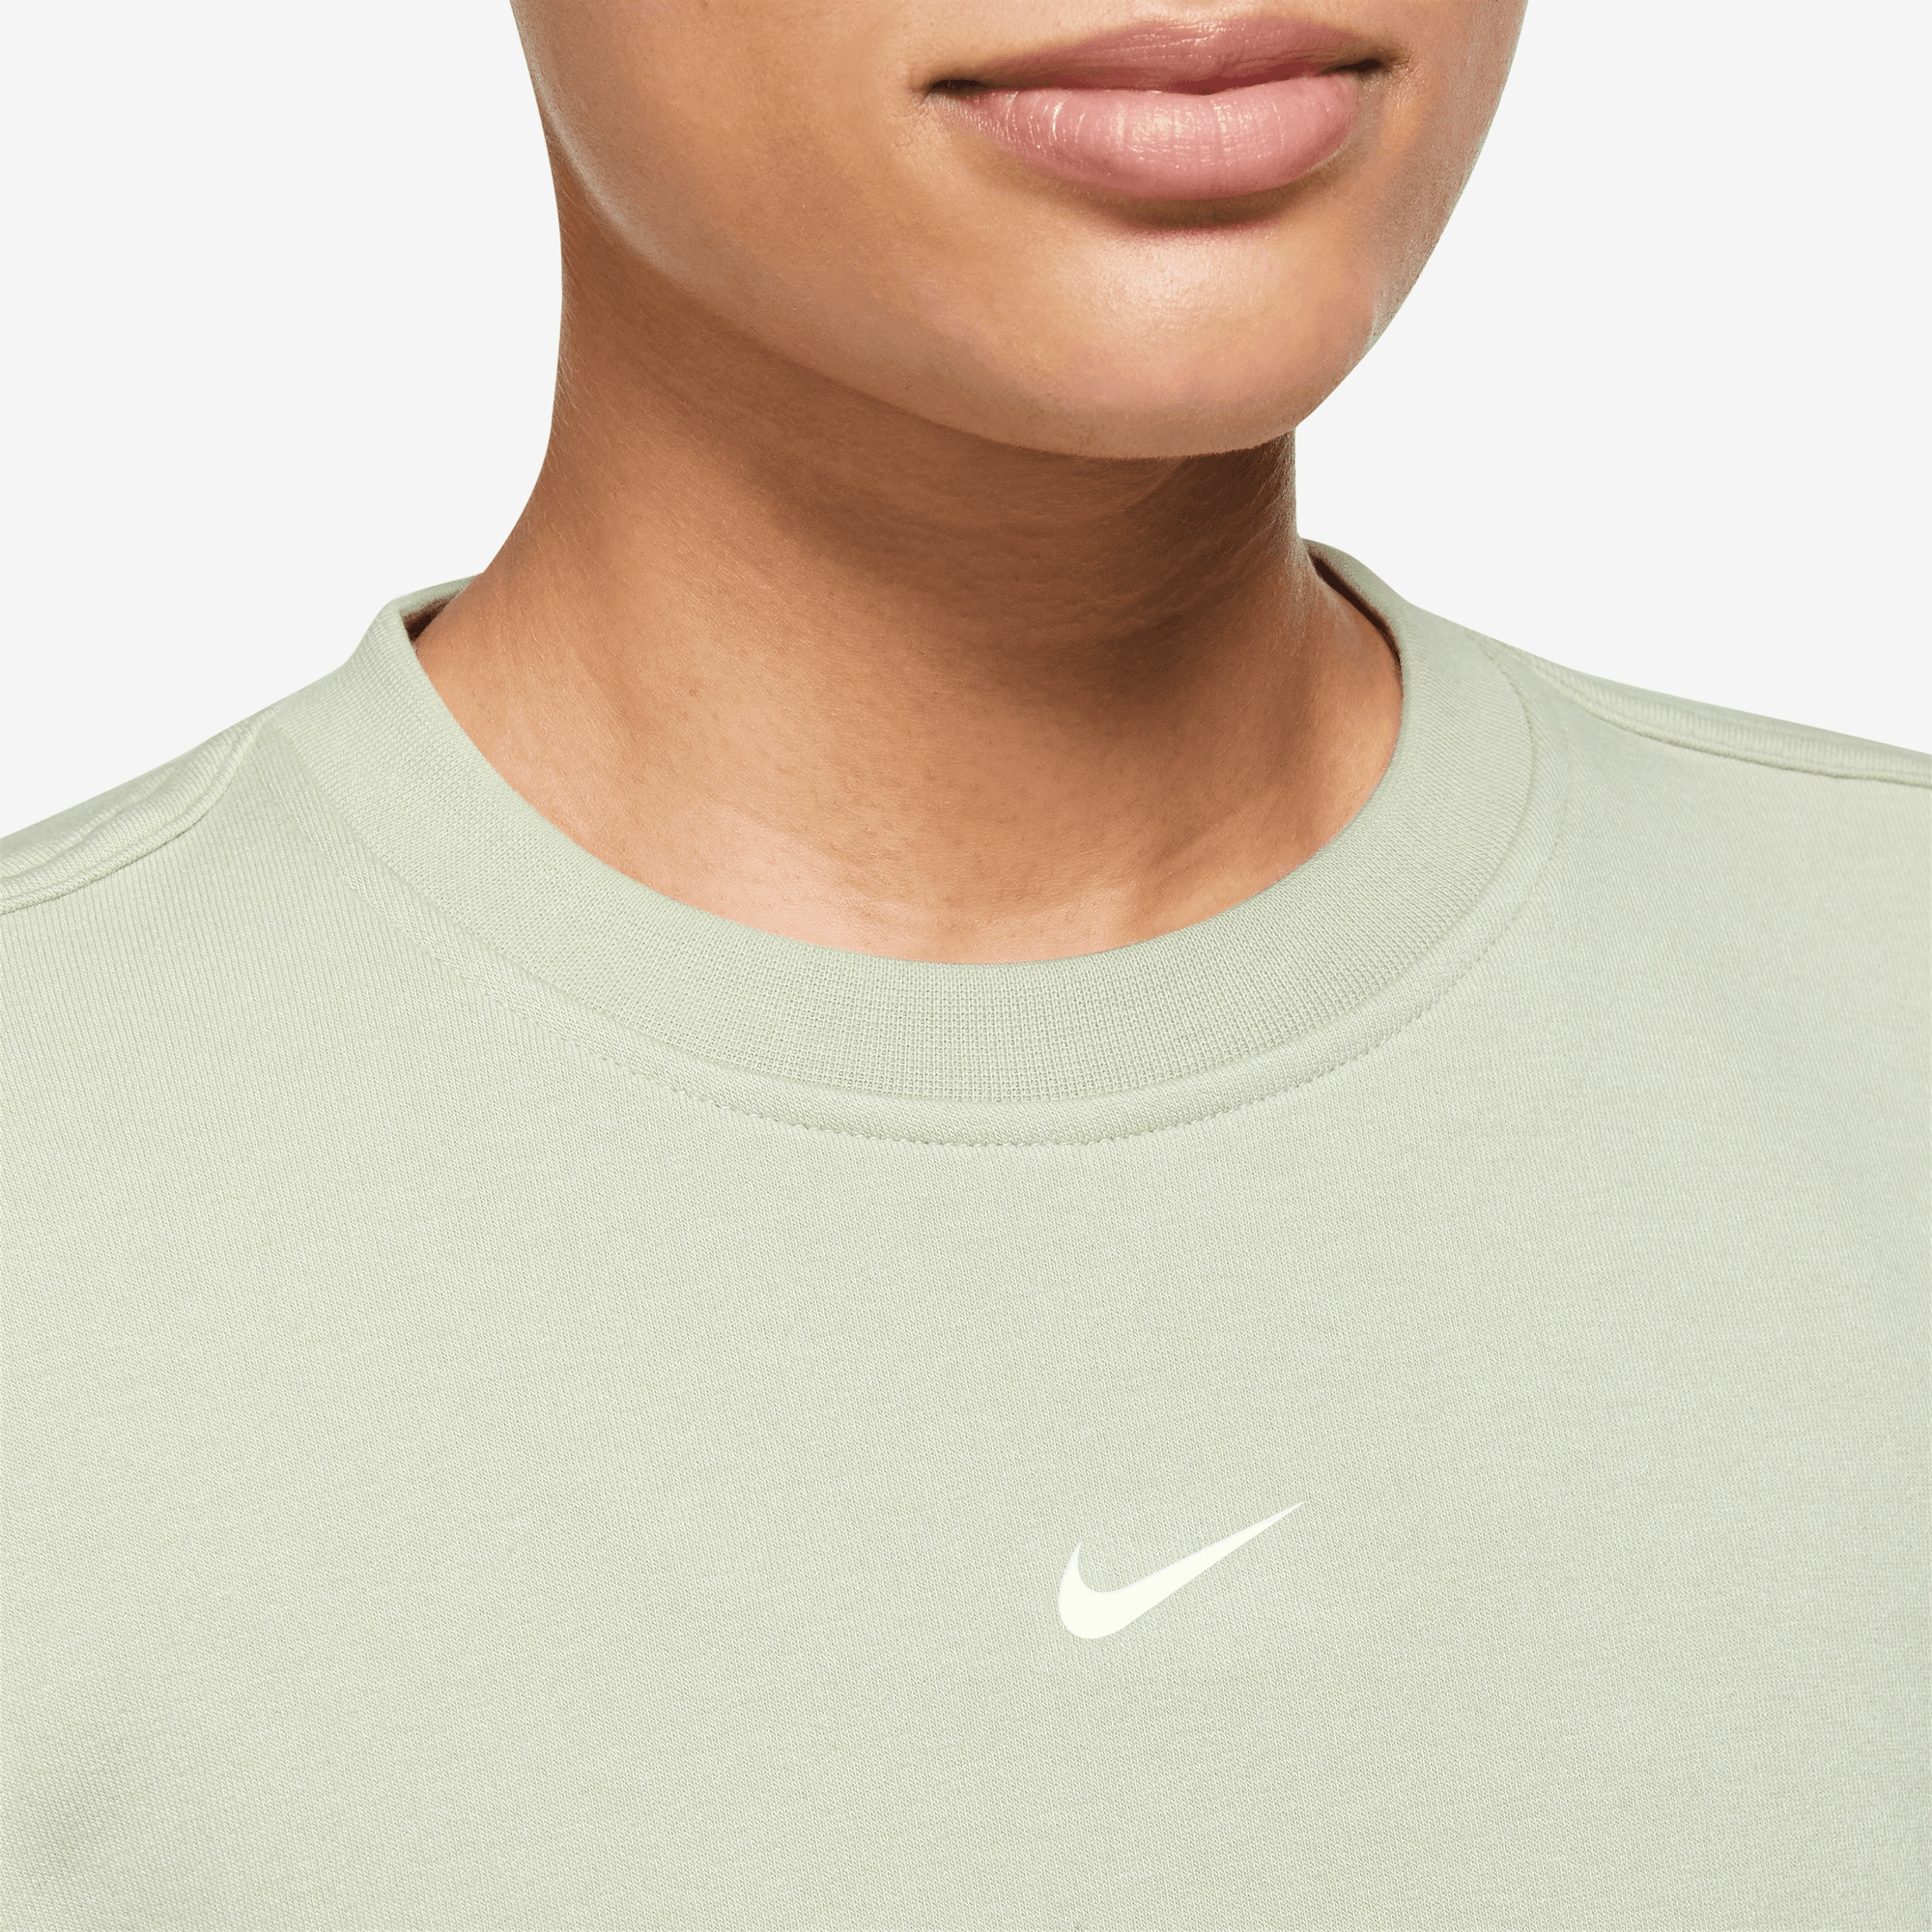 Nike Trainingsshirt »DRI-FIT ONE WOMEN'S LONG-SLEEVED CREW-NECK TOP«